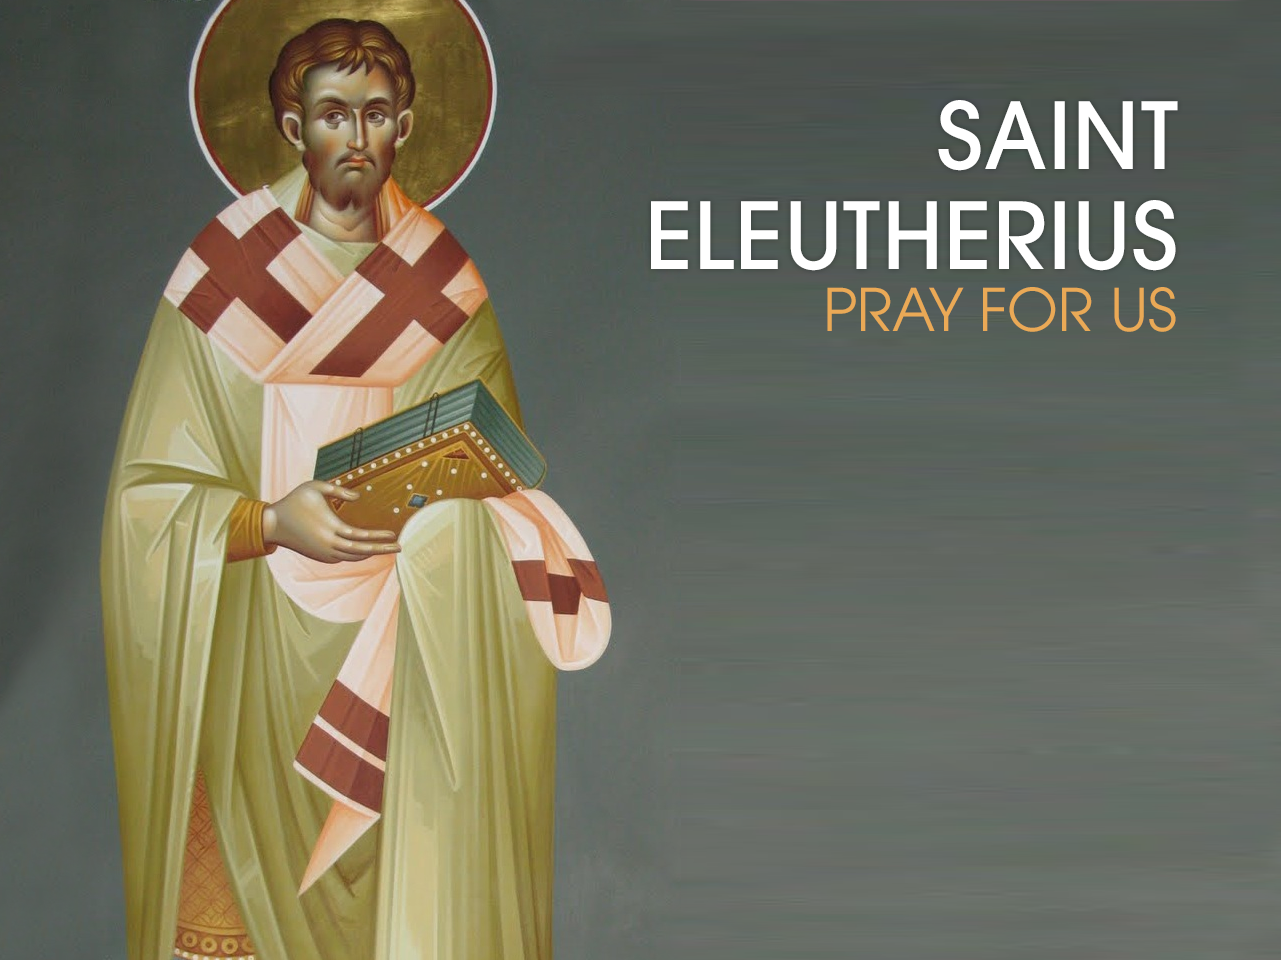 St. Eleutherius